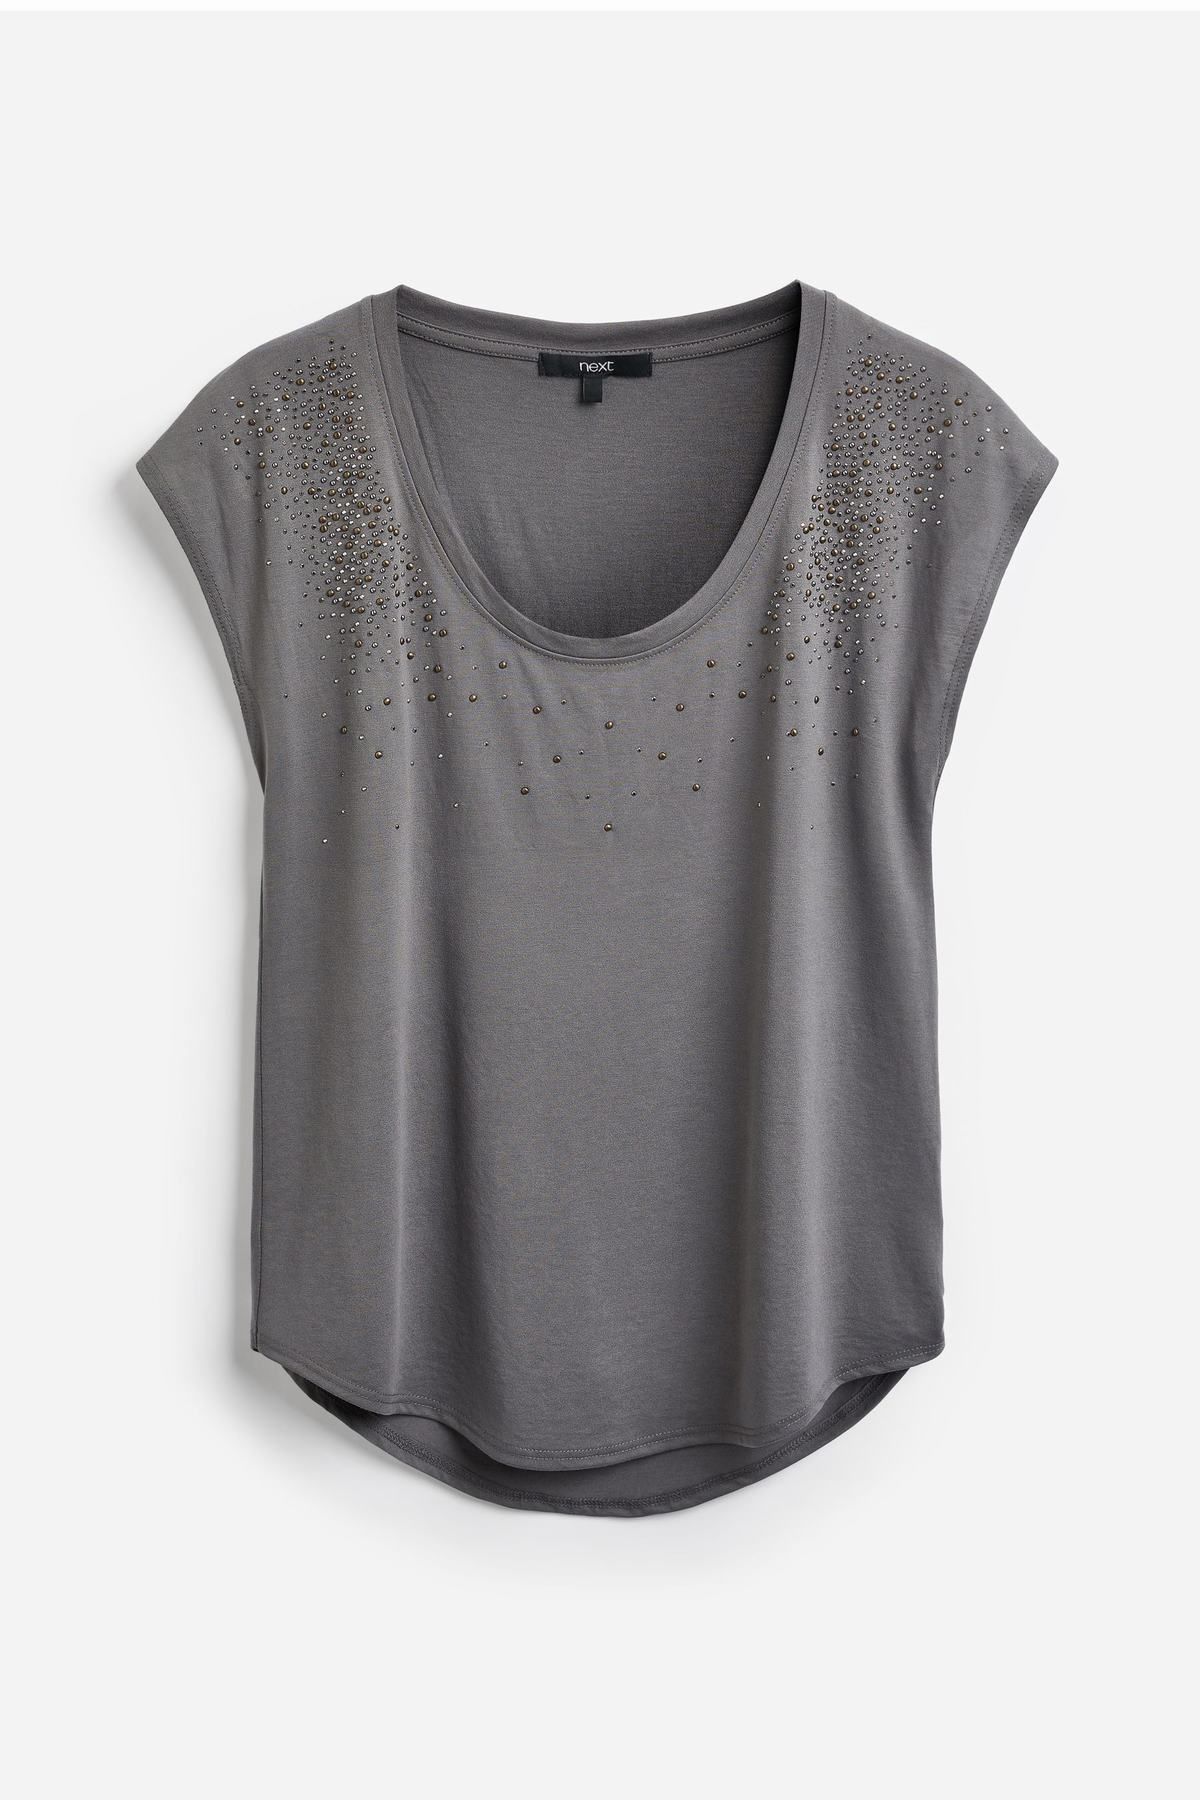 NEXT Short Sleeve Scoop Neck T-Shirt Charcoal Grey Embellished Women